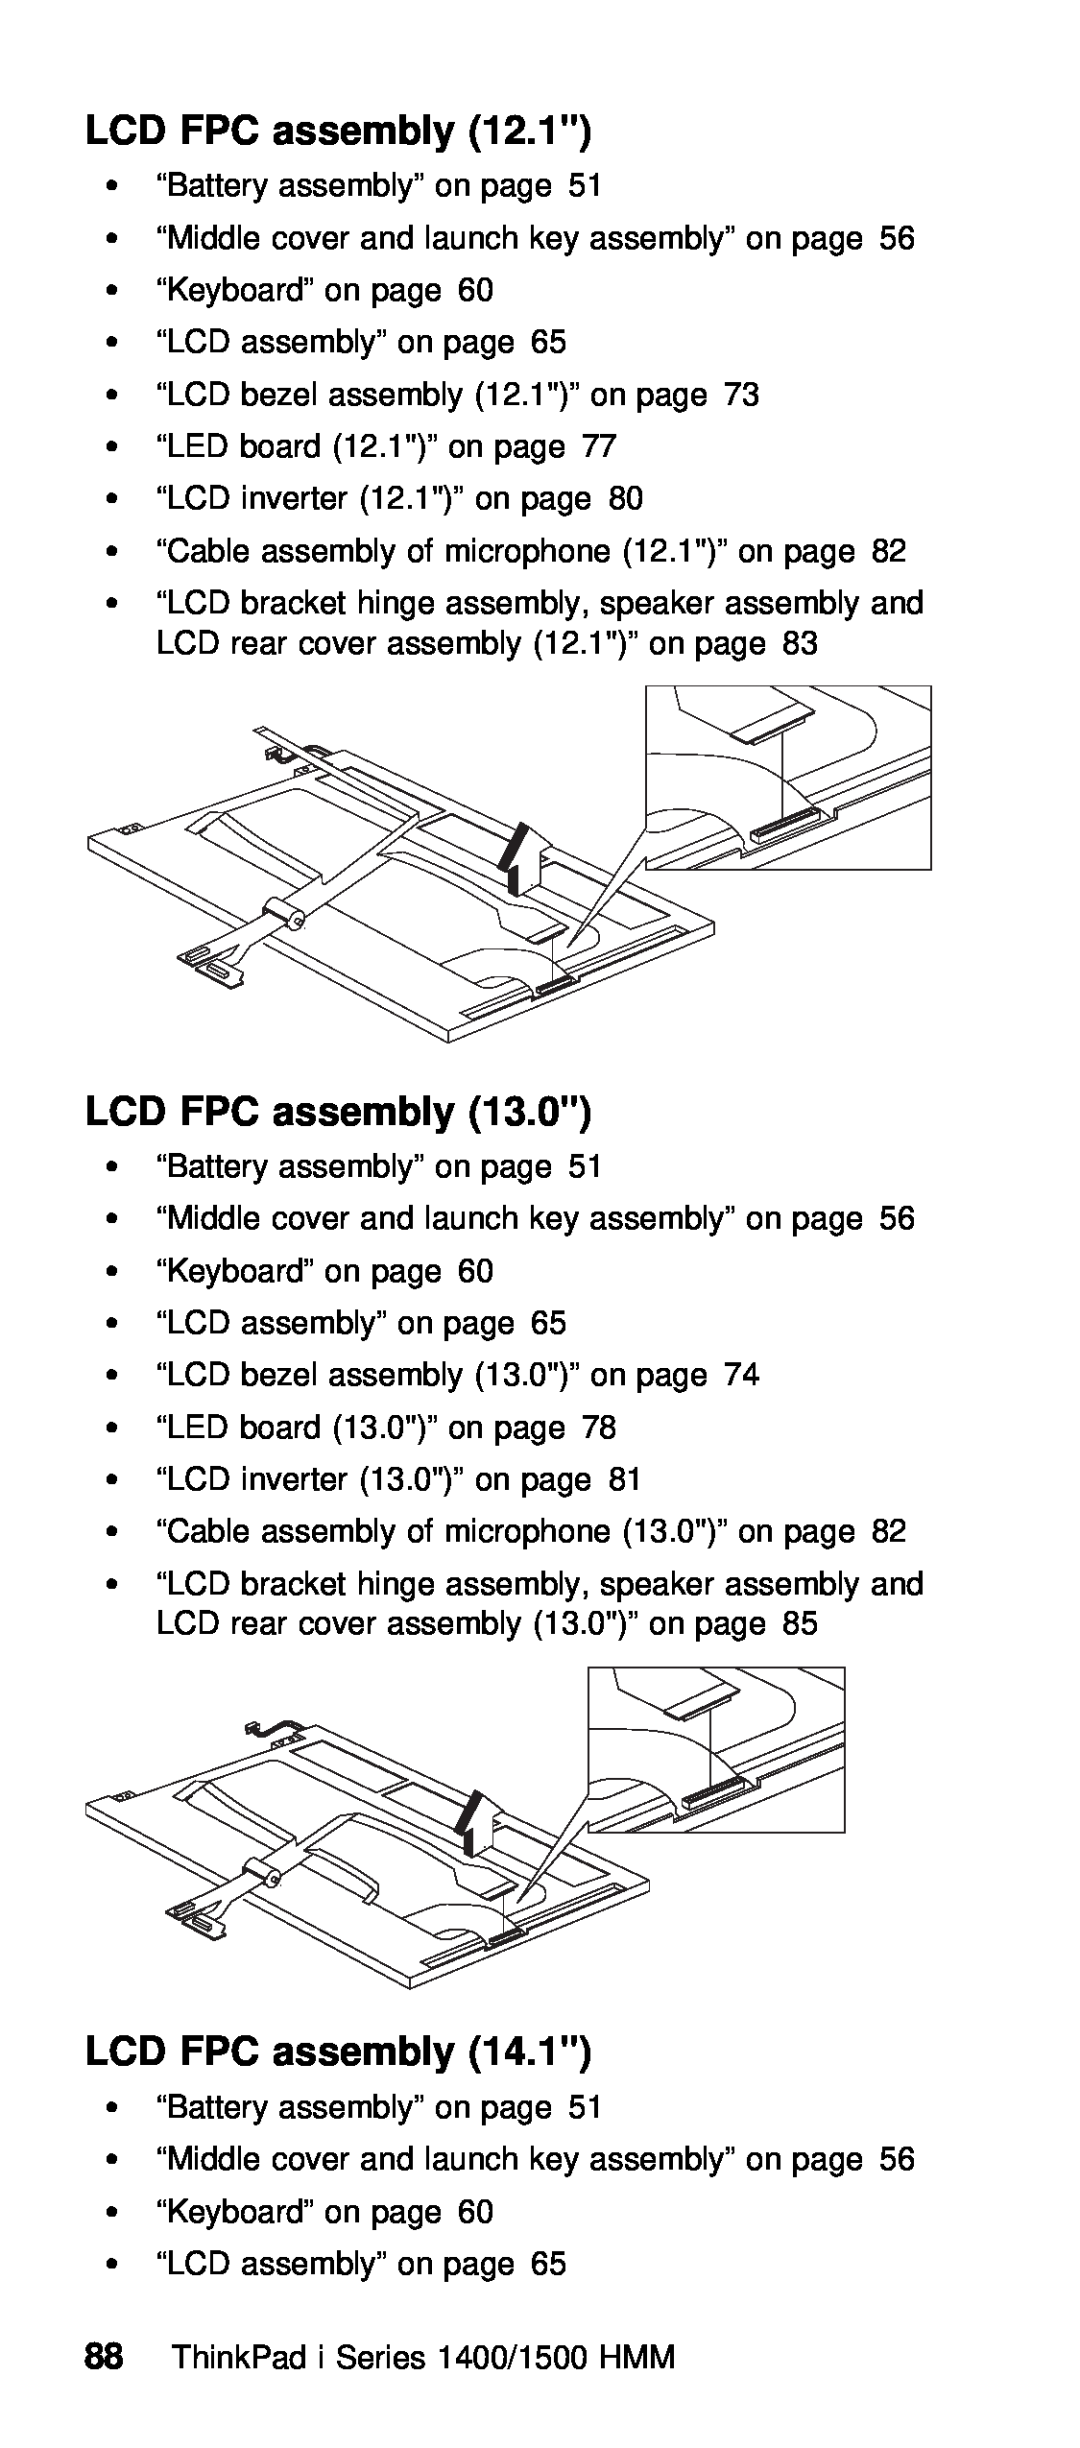 IBM Series 1500, Series 1400 manual FPC assembly, 12.1, 13.0, 14.1 